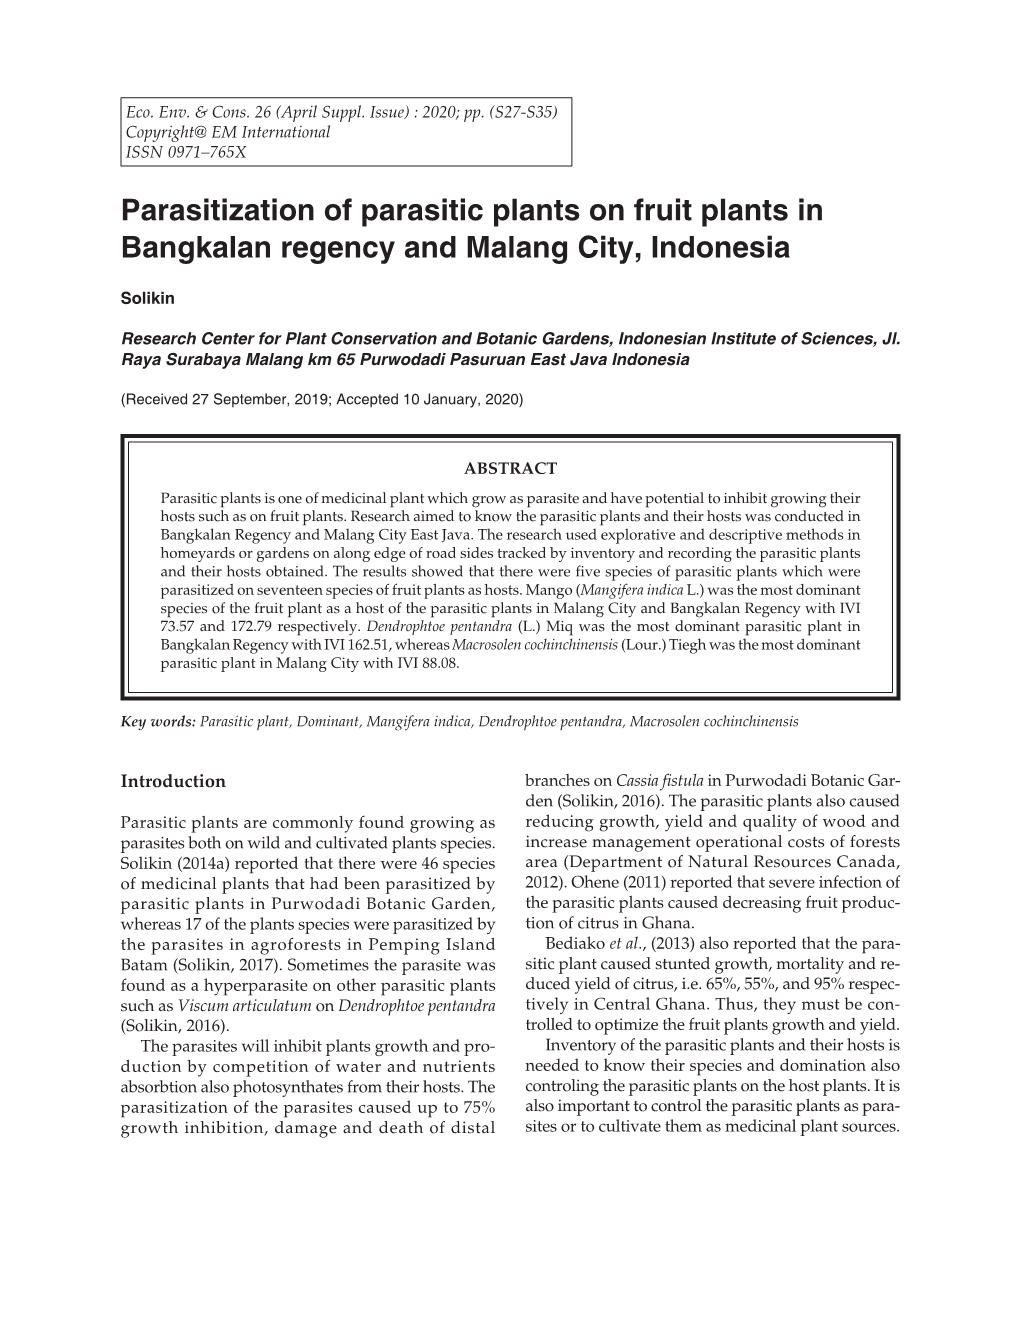 Parasitization of Parasitic Plants on Fruit Plants in Bangkalan Regency and Malang City, Indonesia